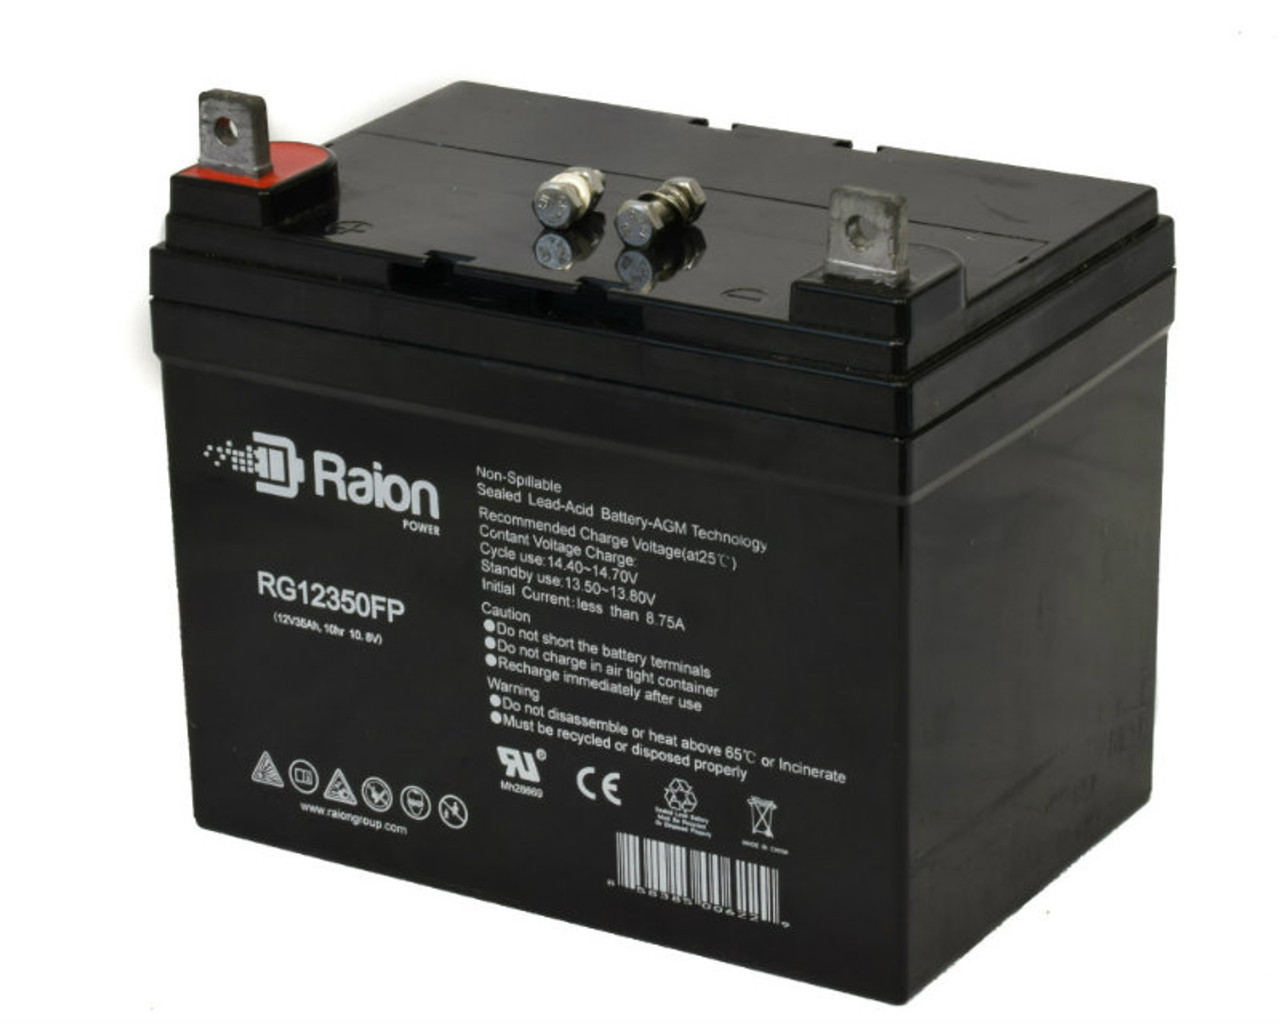 Raion Power Replacement 12V 35Ah RG12350FP Battery for Kubota B5100